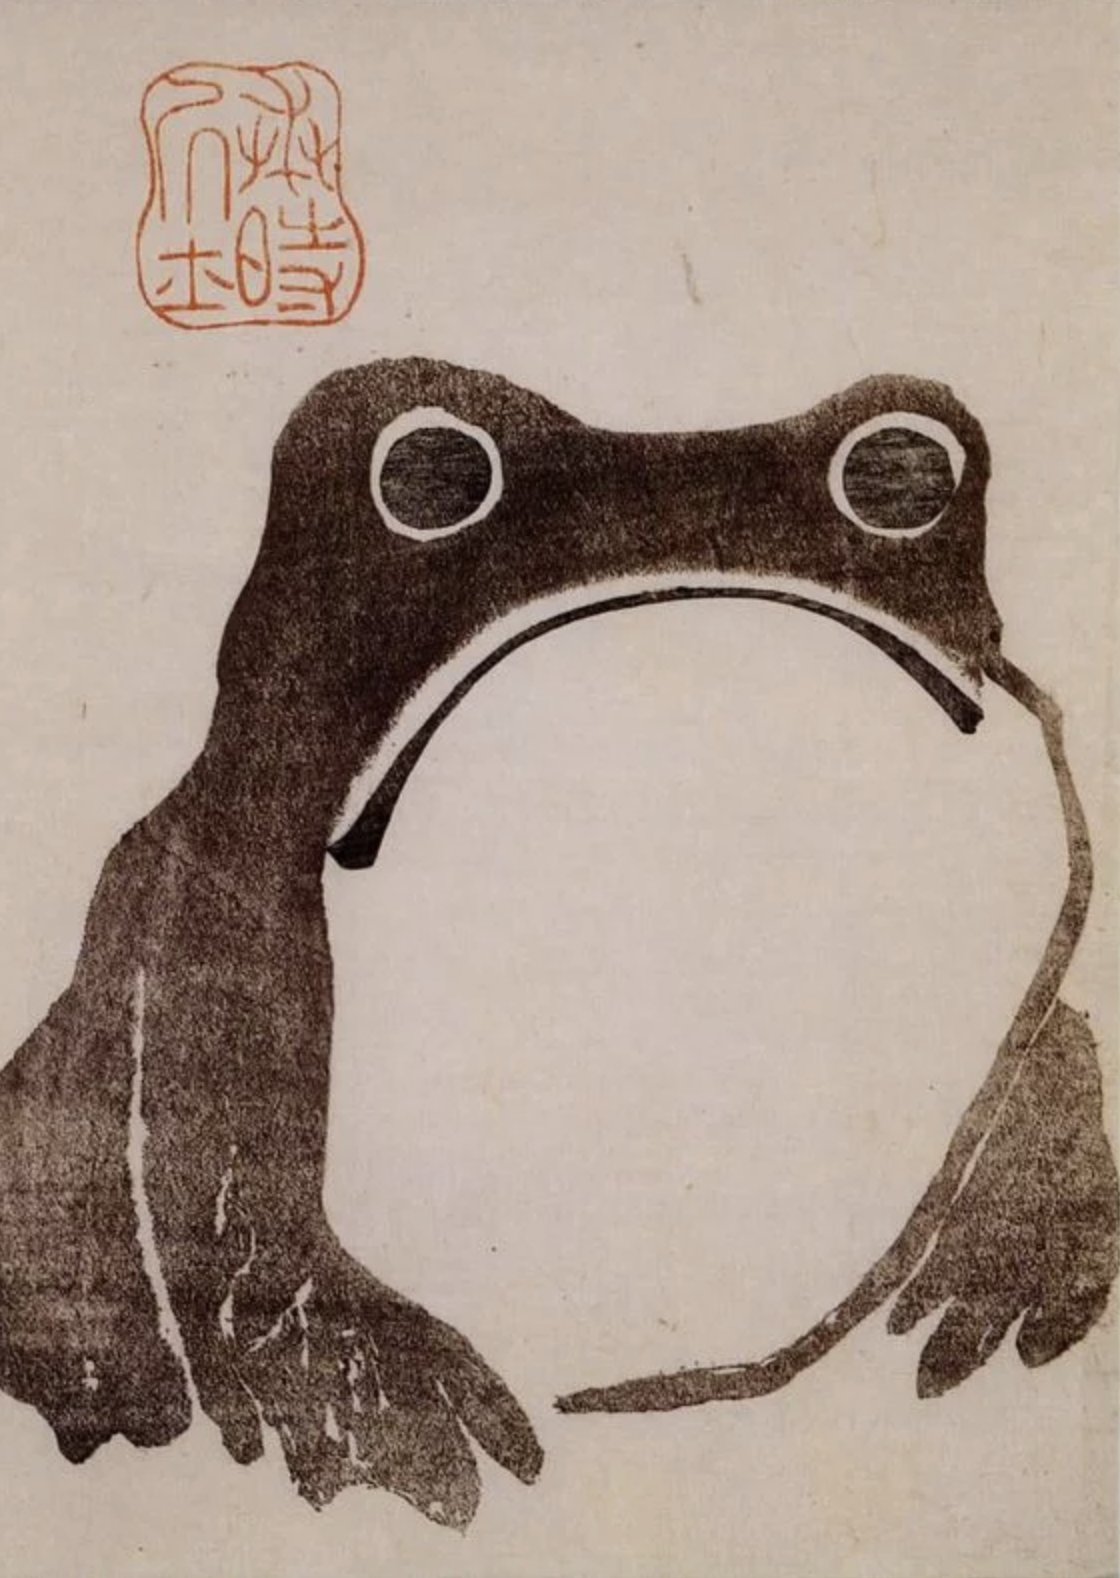 Frog by Japanese artist Matsumoto Hoji from Meika Gafu (1814)